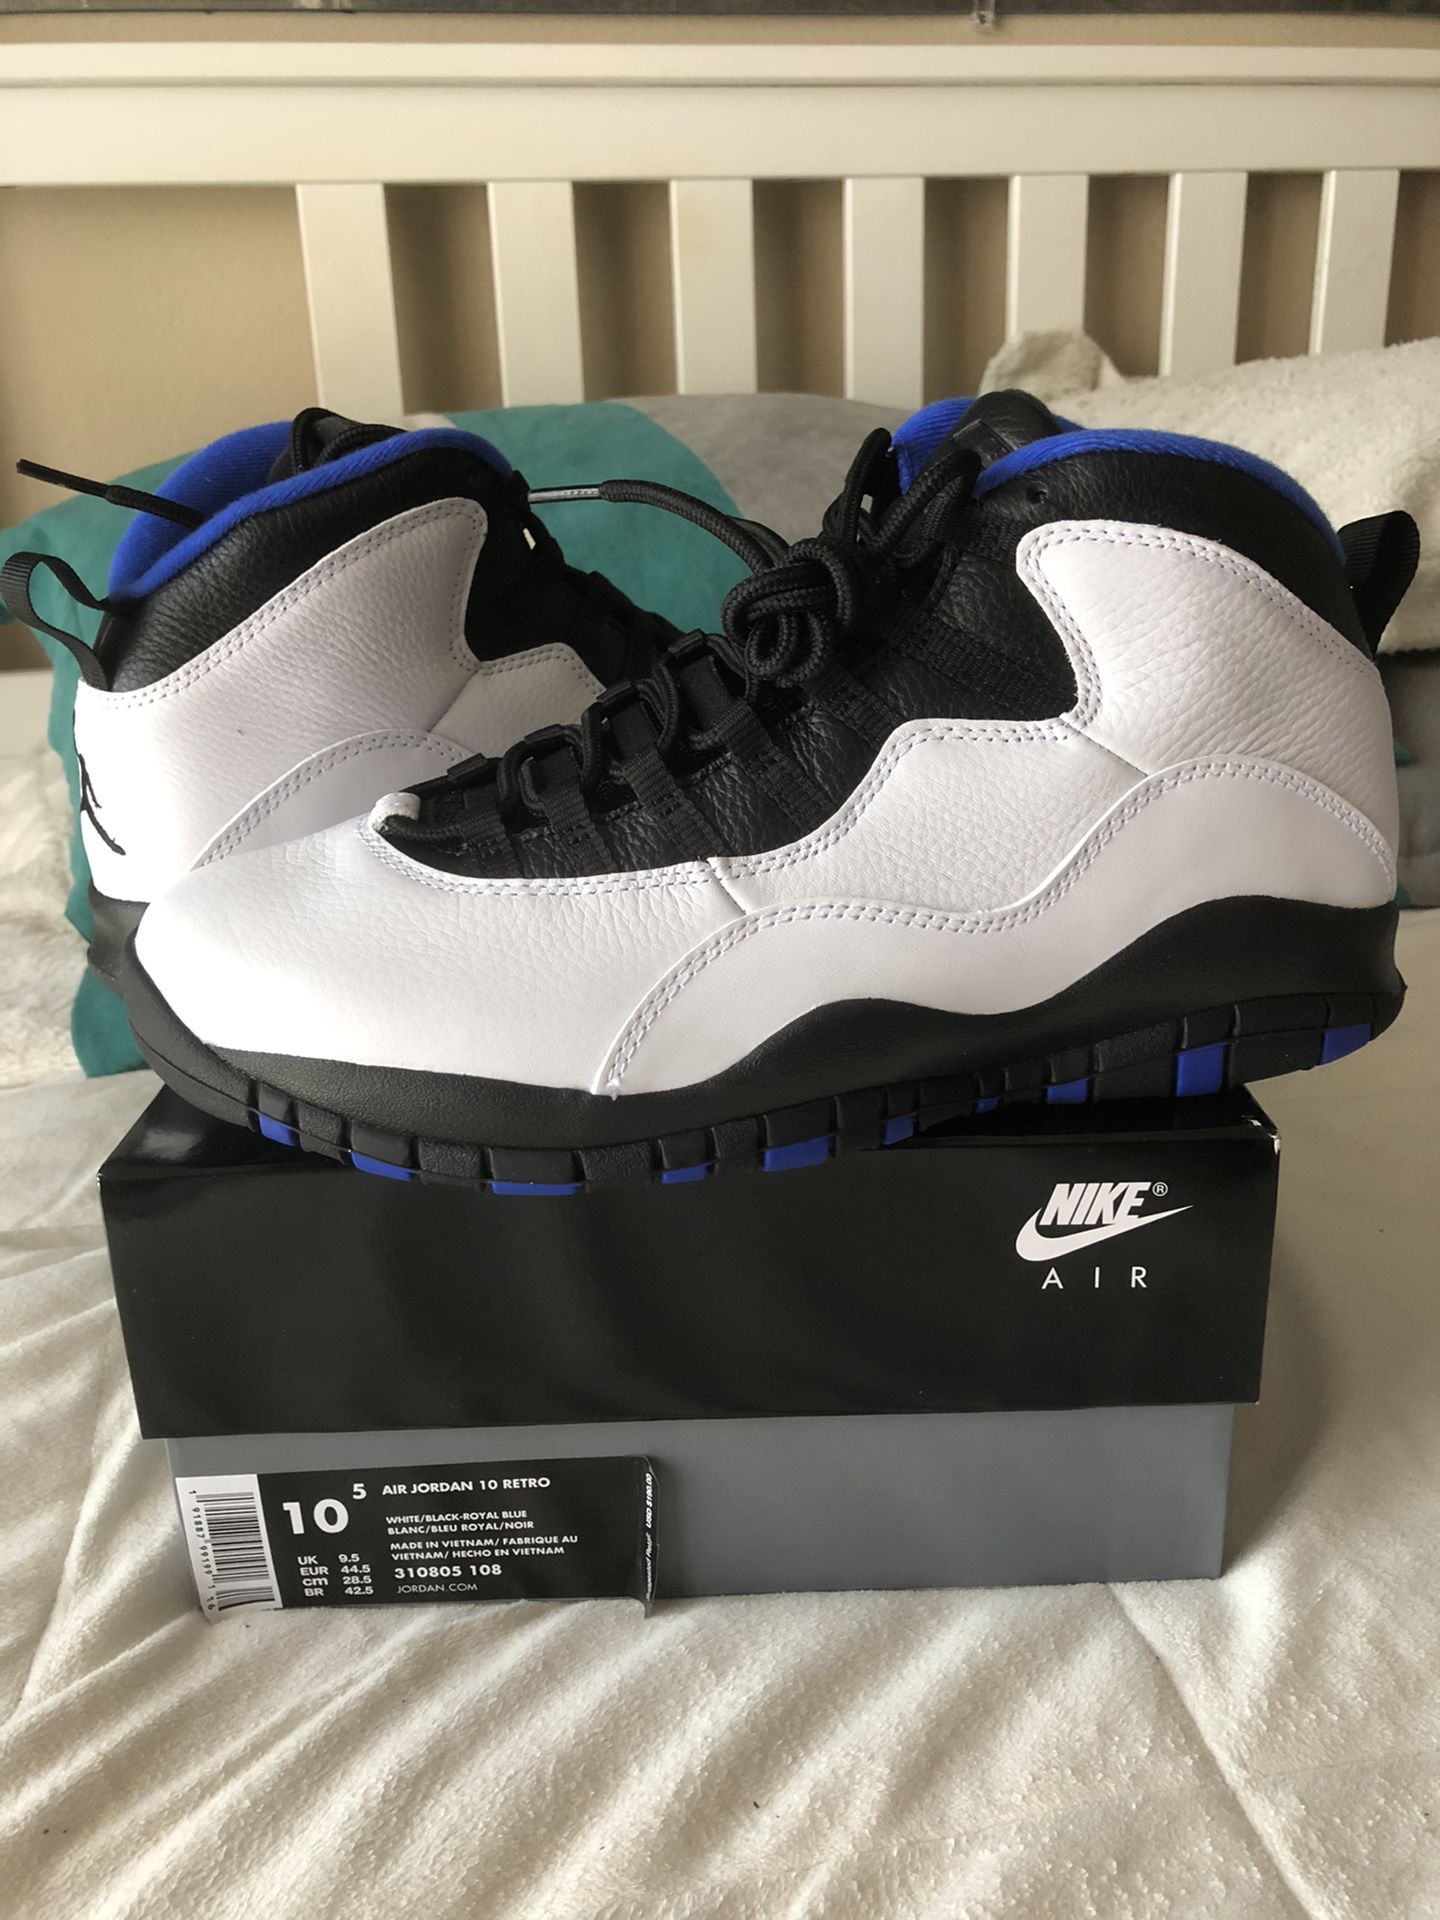 Nike air Jordan’s 10 retro size 10.5